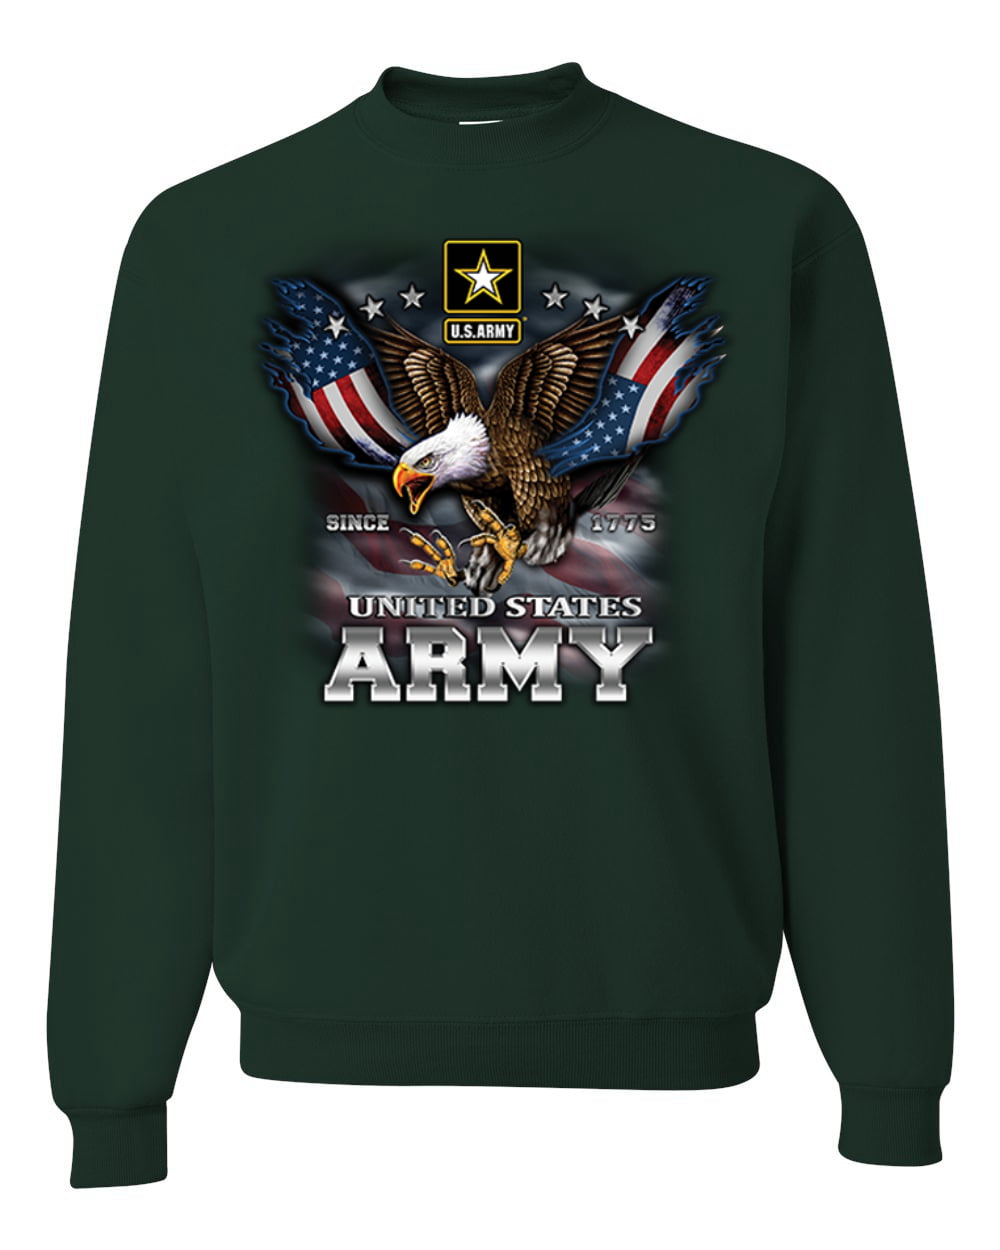 USA Stars and Stripes Sweatshirt Patriot American Pride Bald Eagle Sweater